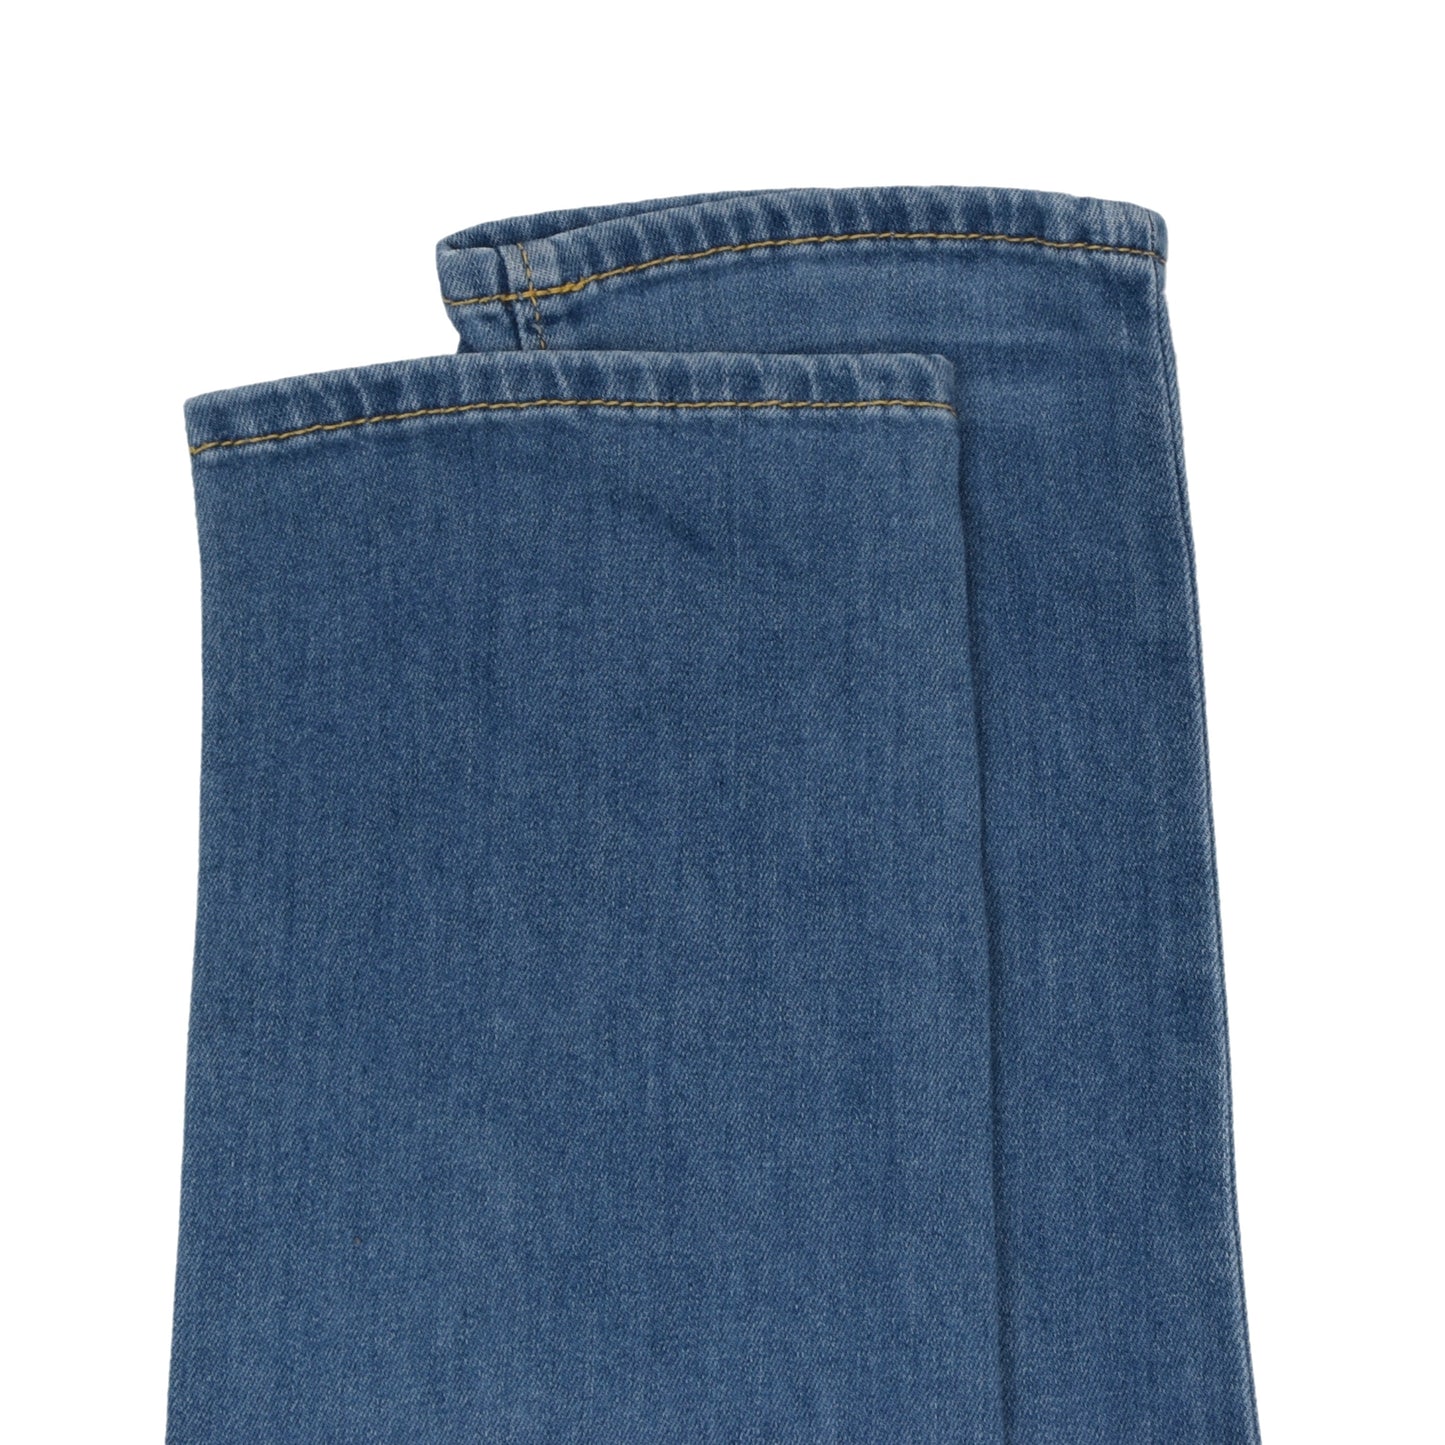 PT05 Jeans New Superslim Fit Size 33 - Blue